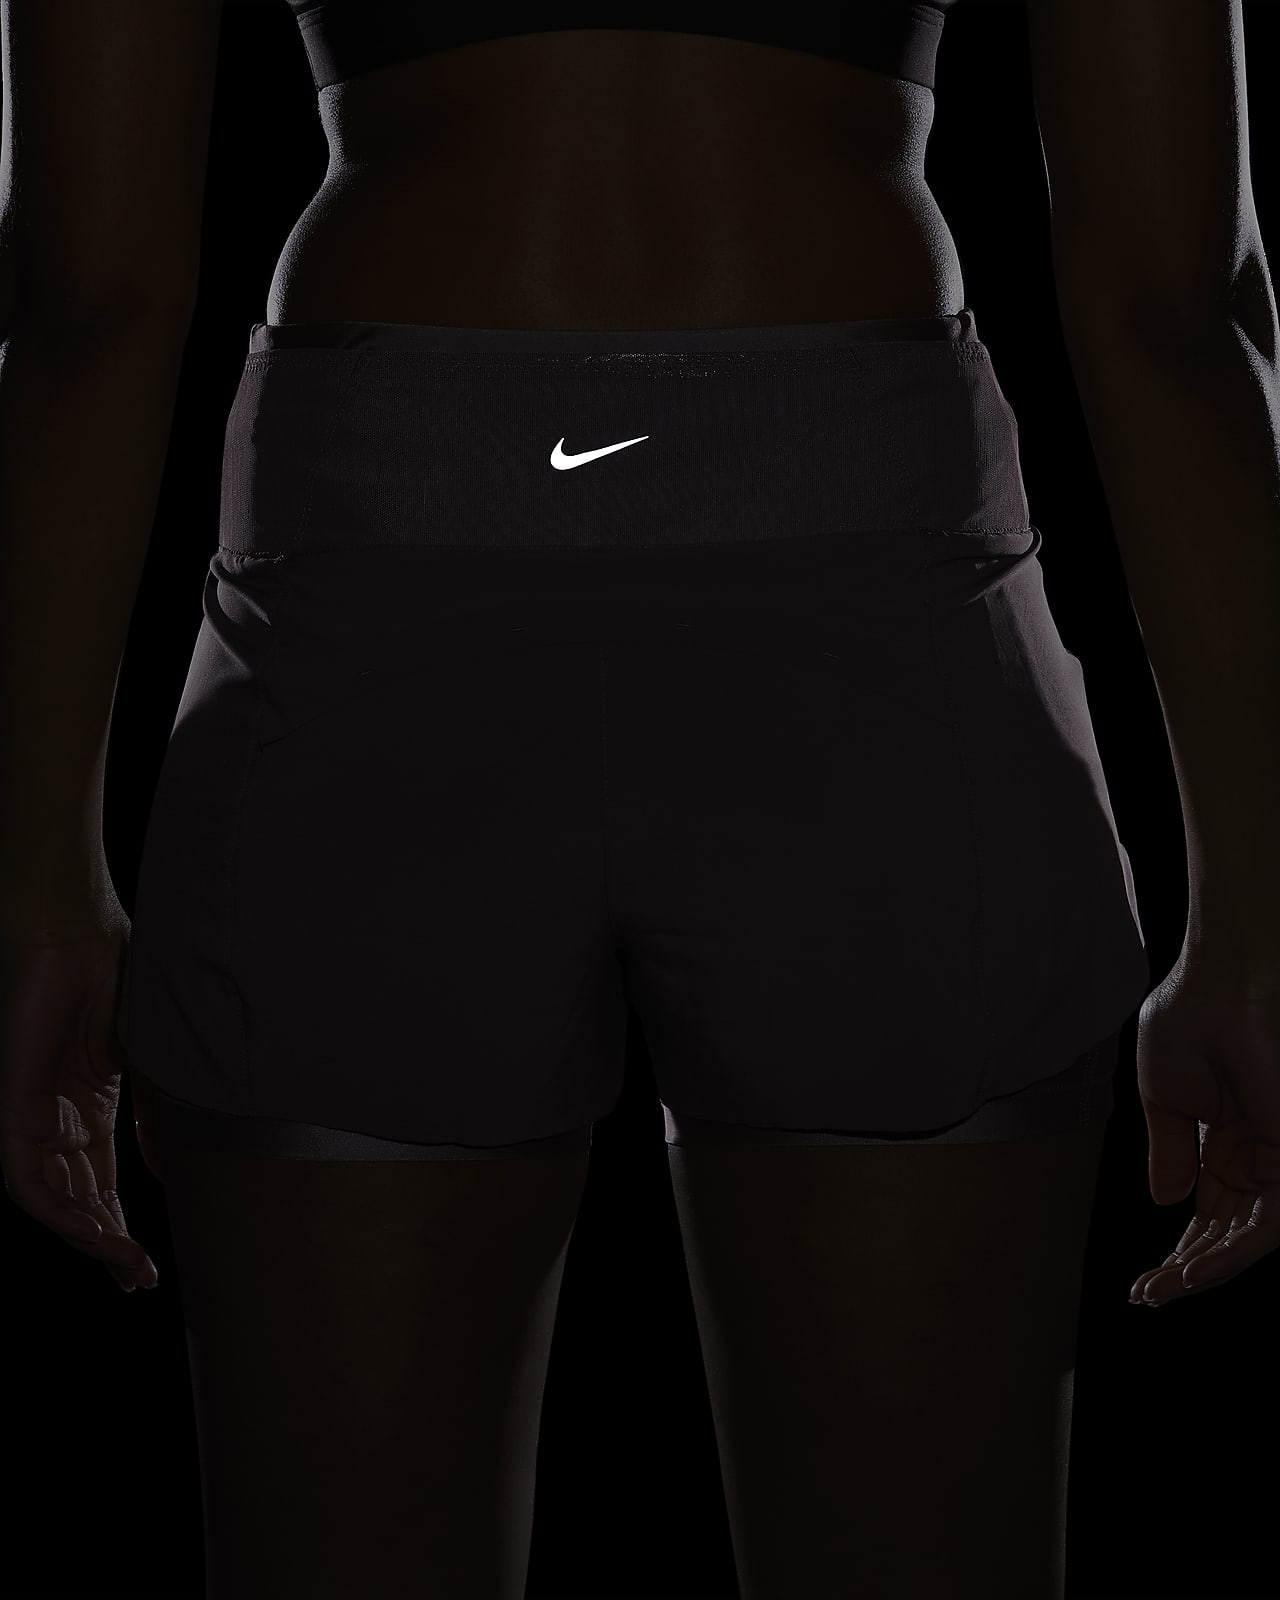 The Best Nike Running Shorts for Women. Nike CA